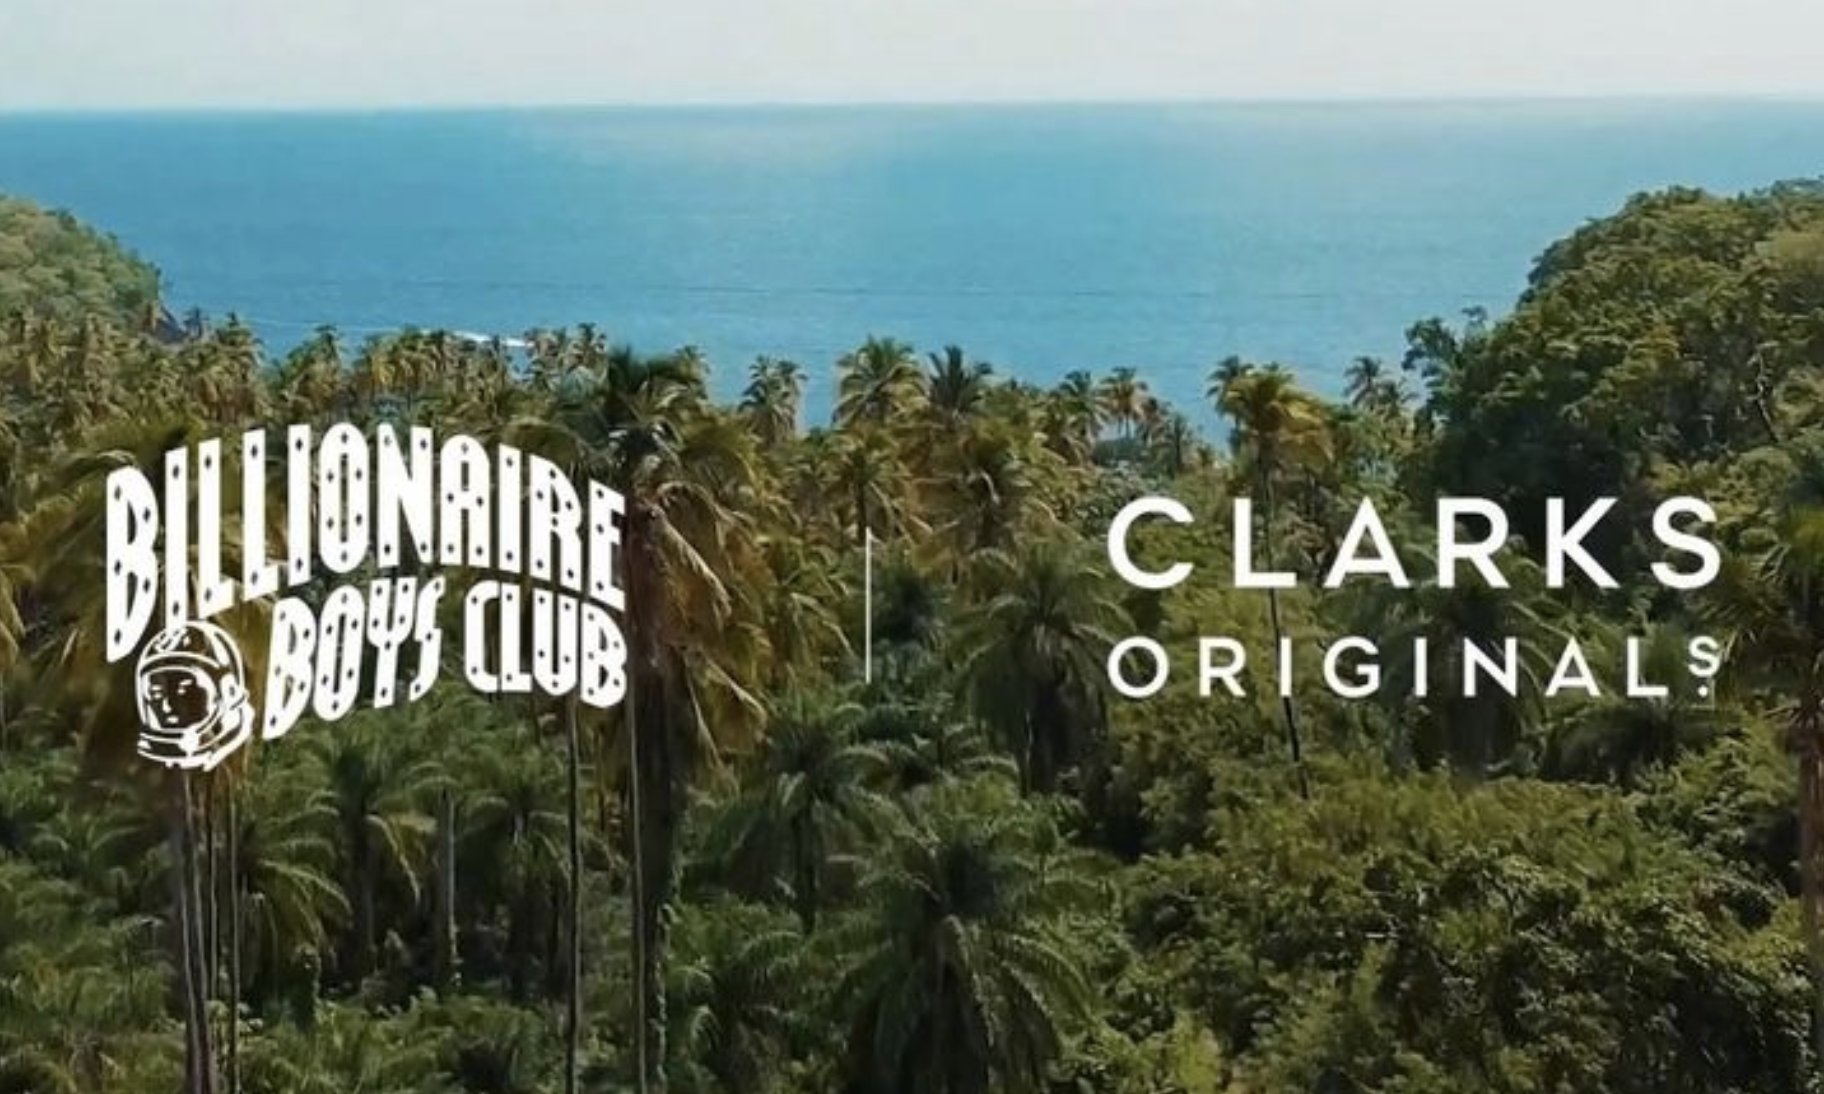 Billionaire Boys Club x Clarks Originals 合作系列即将发布